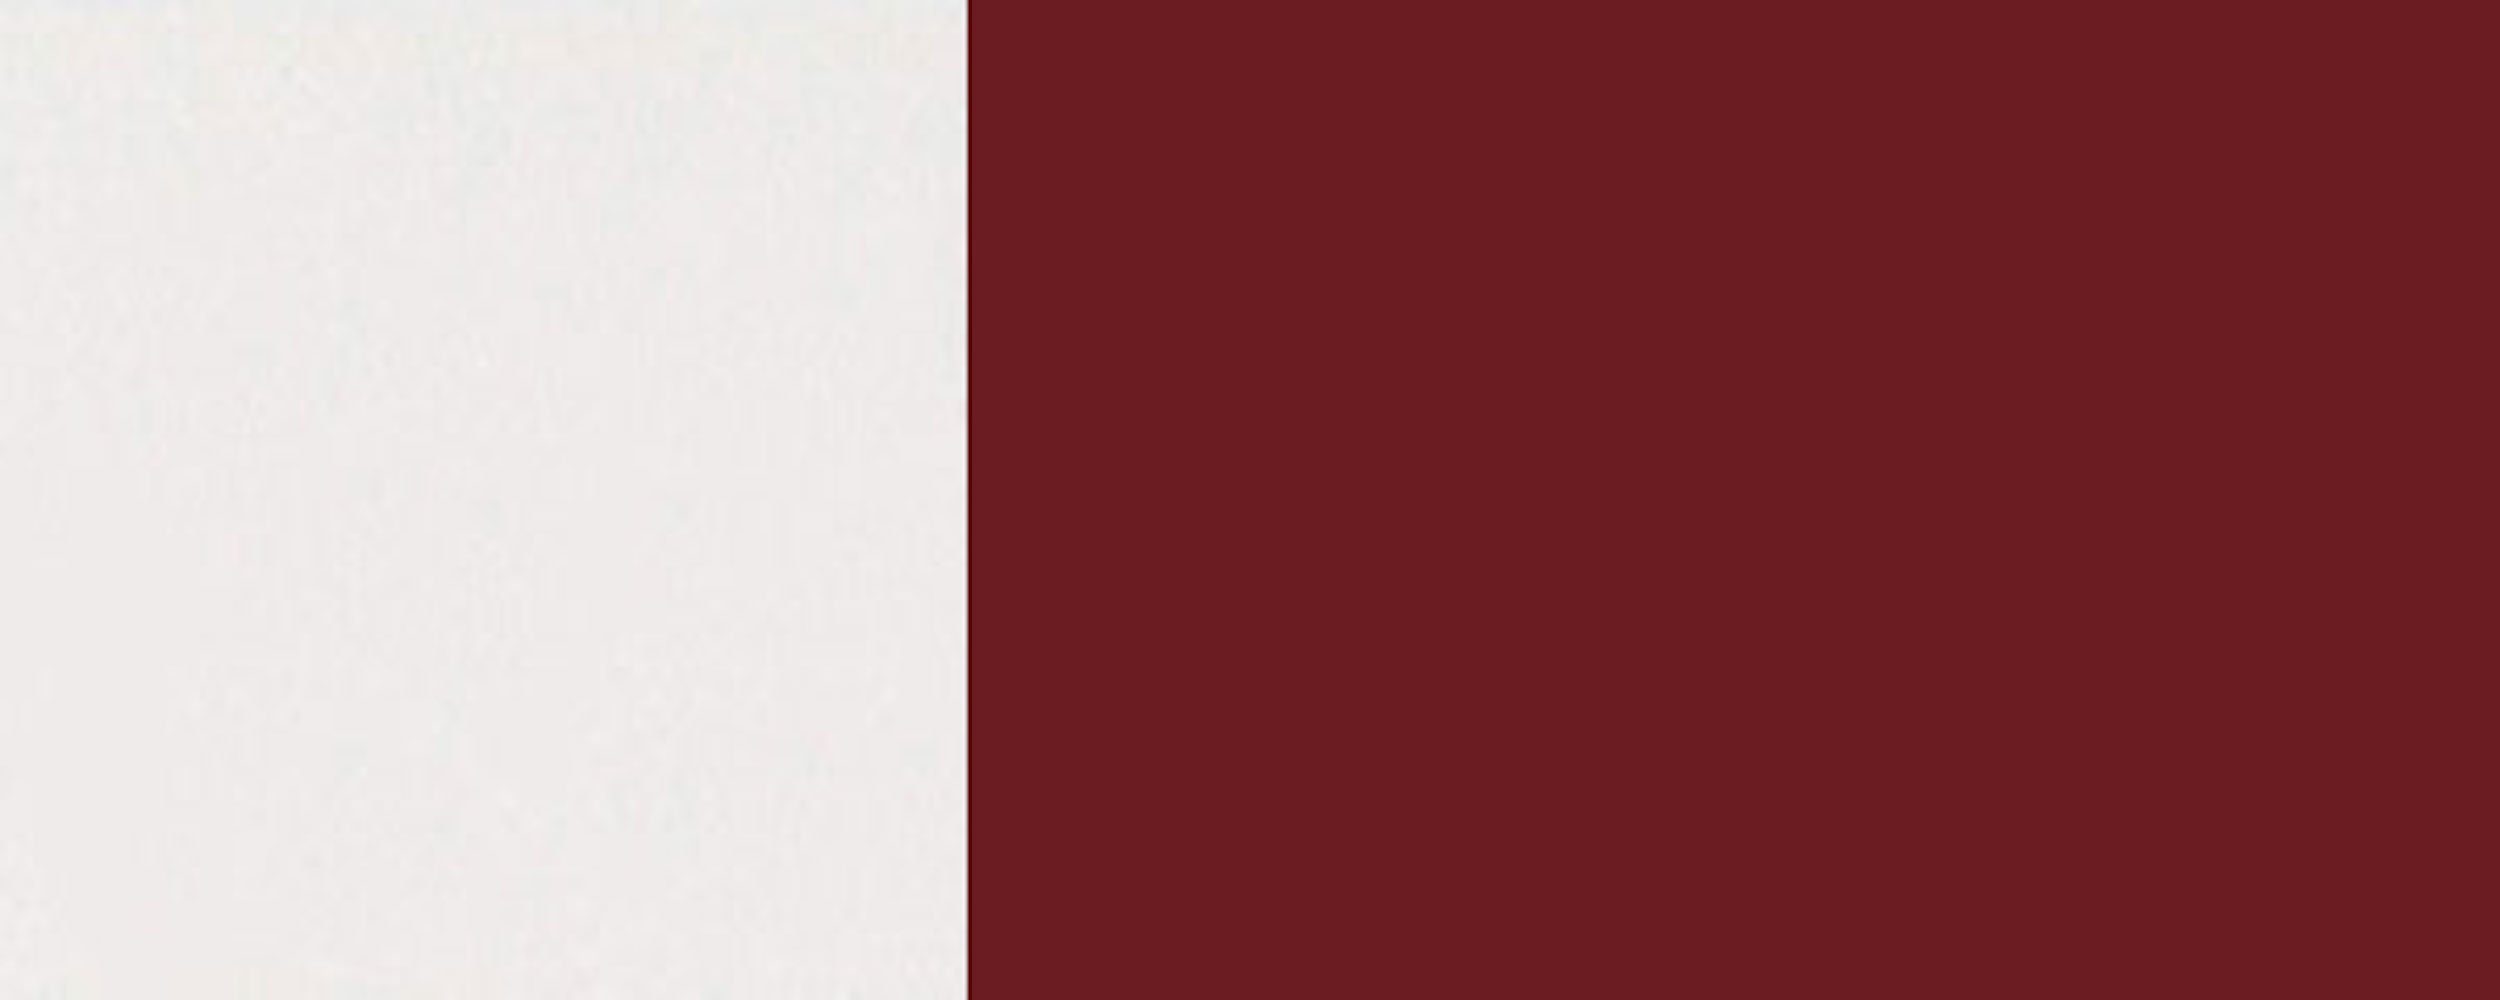 & purpurrot Faltlifthängeschrank 1-türig Hochfaltklappe (Rimini) RAL matt 3004 Korpusfarbe 60cm 2-teilige Feldmann-Wohnen Front- wählbar Rimini